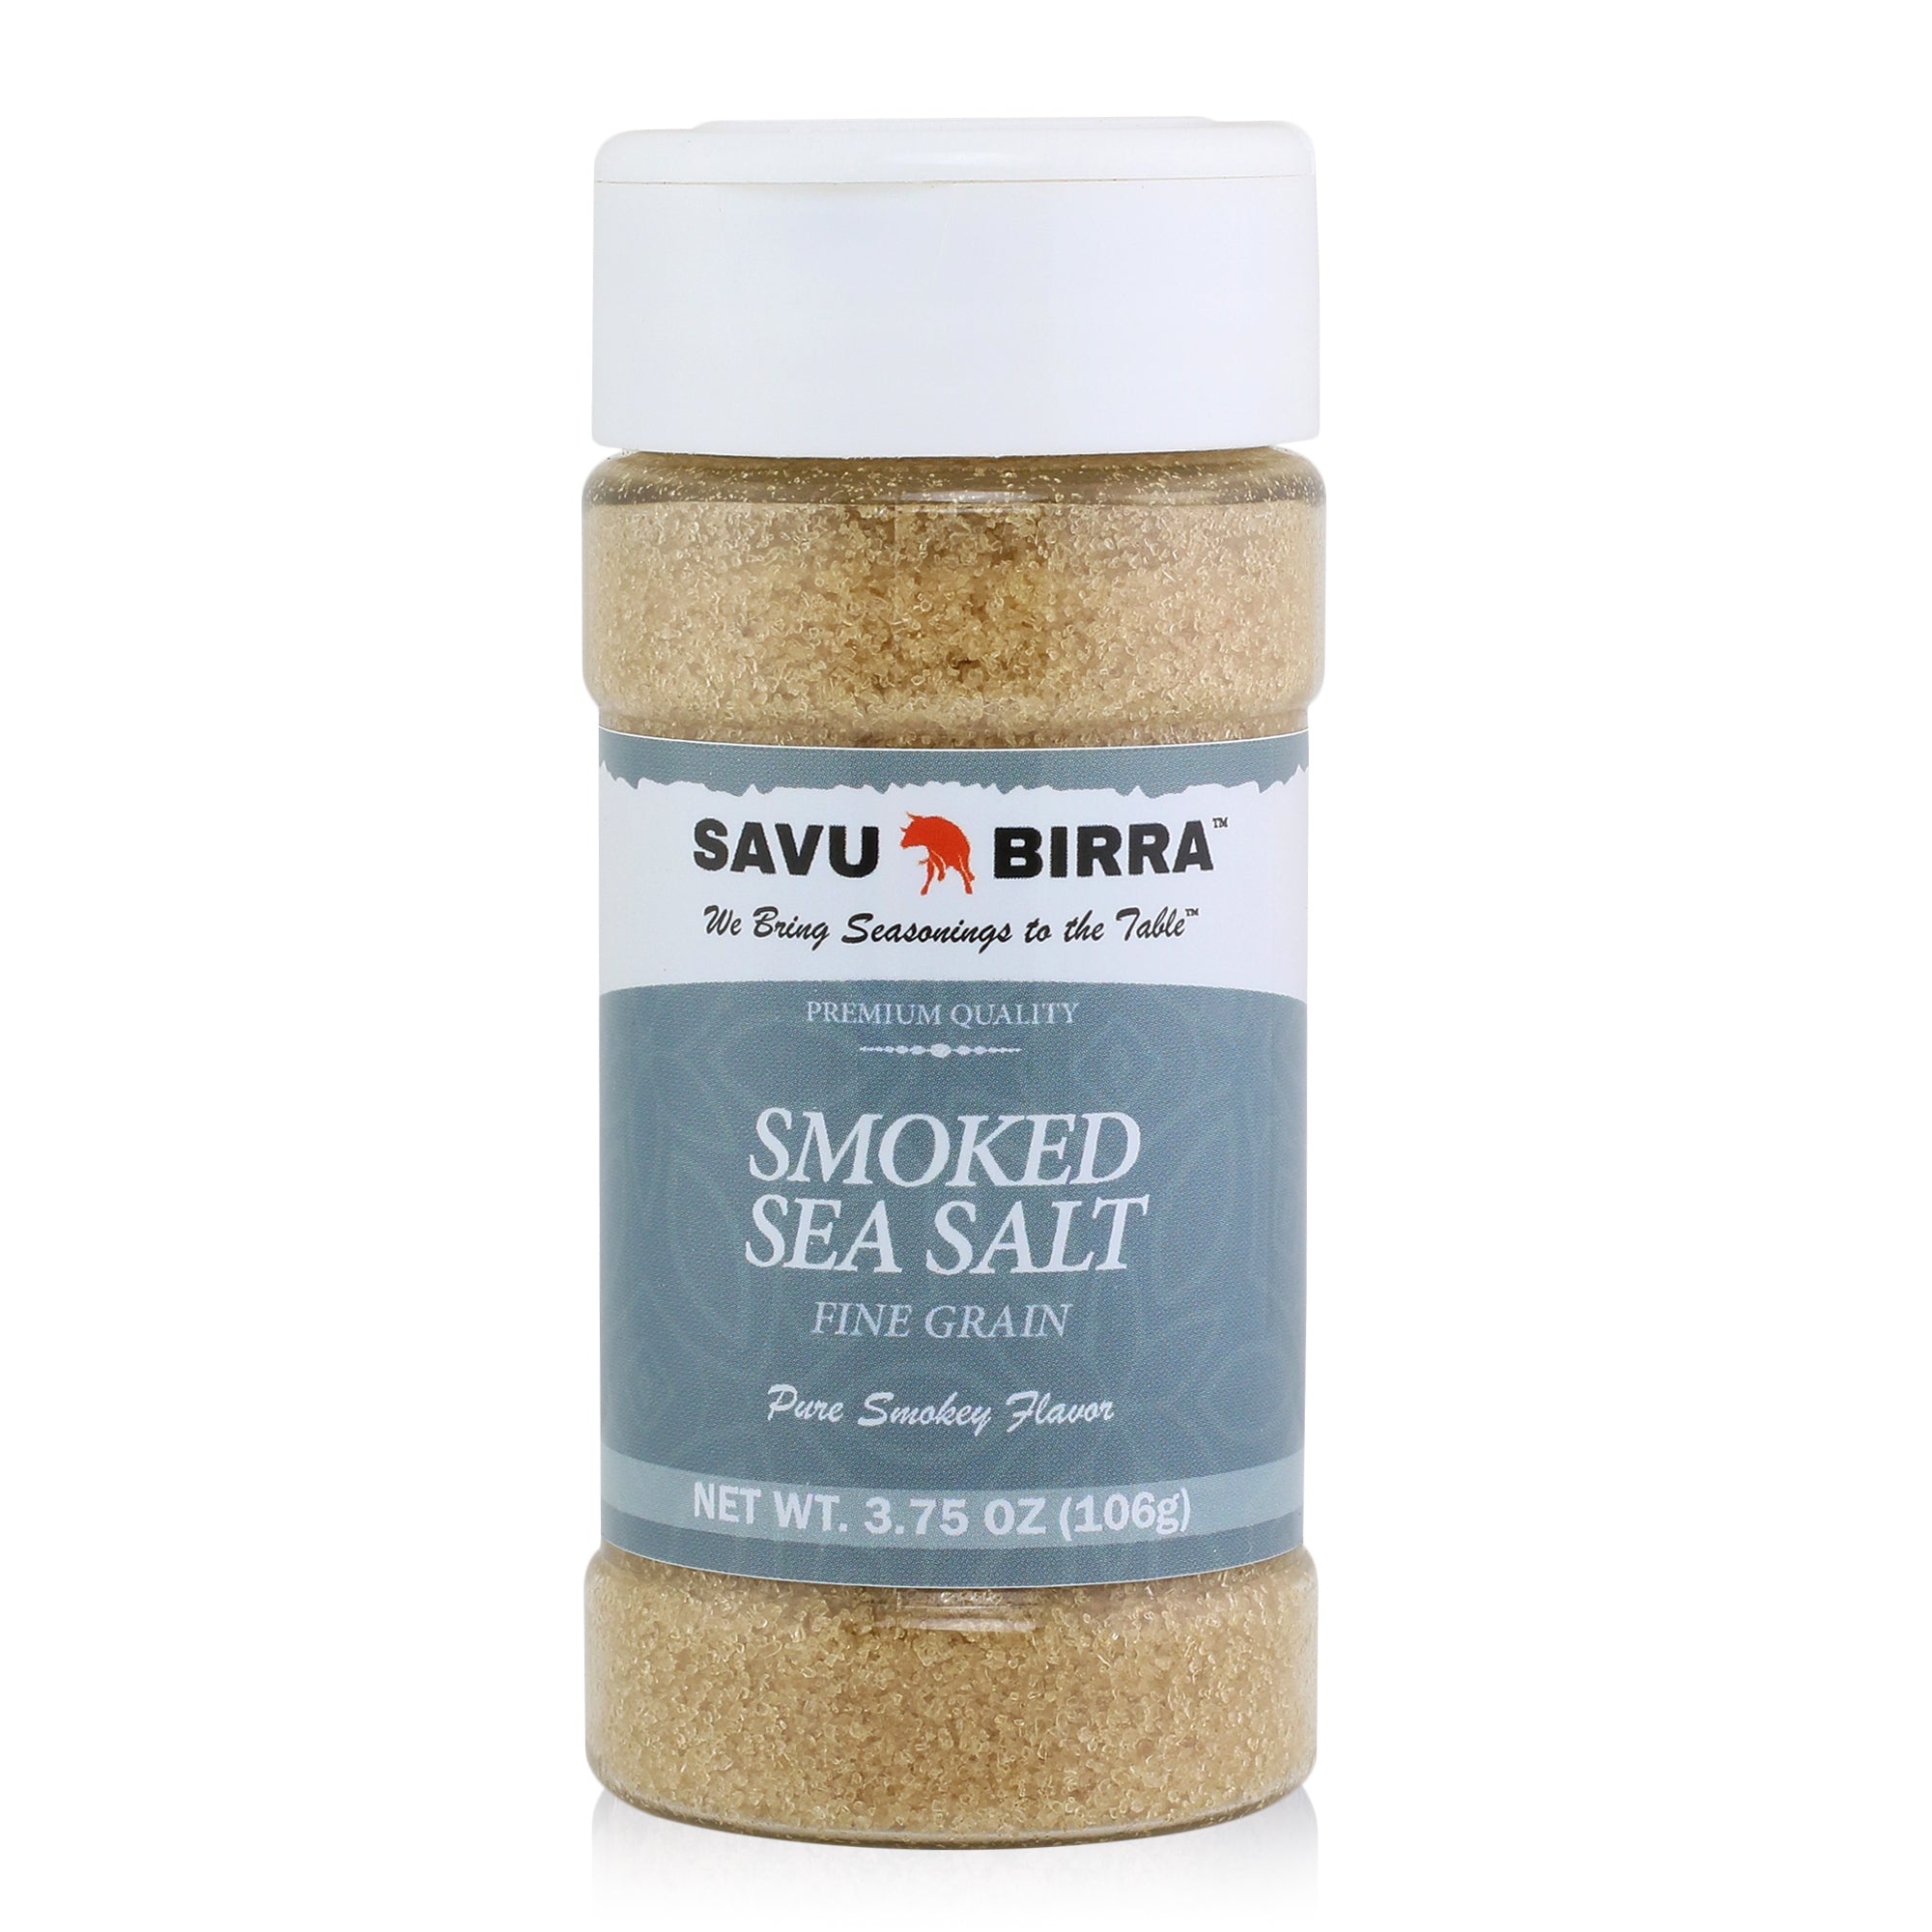 Smoked Sea Salt | Fine Grain Sea SaltSavu Birra LLC